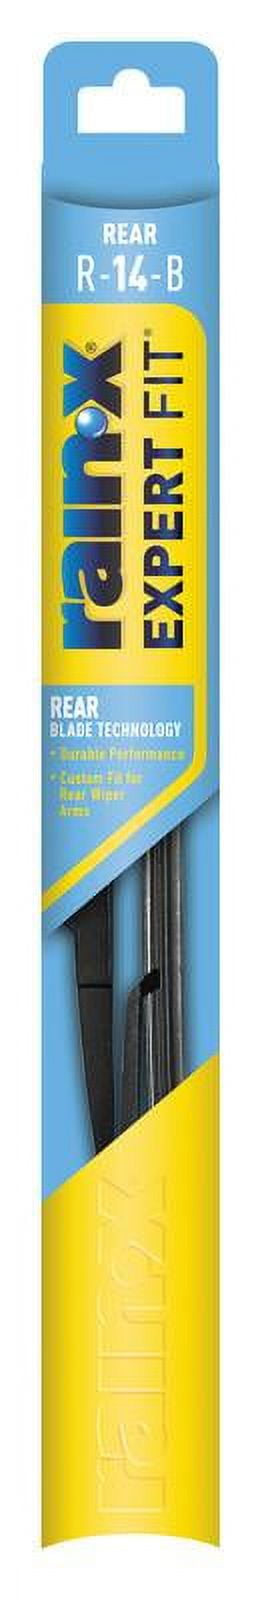 Rain-x Rearview Wiper Blade 14b : Target